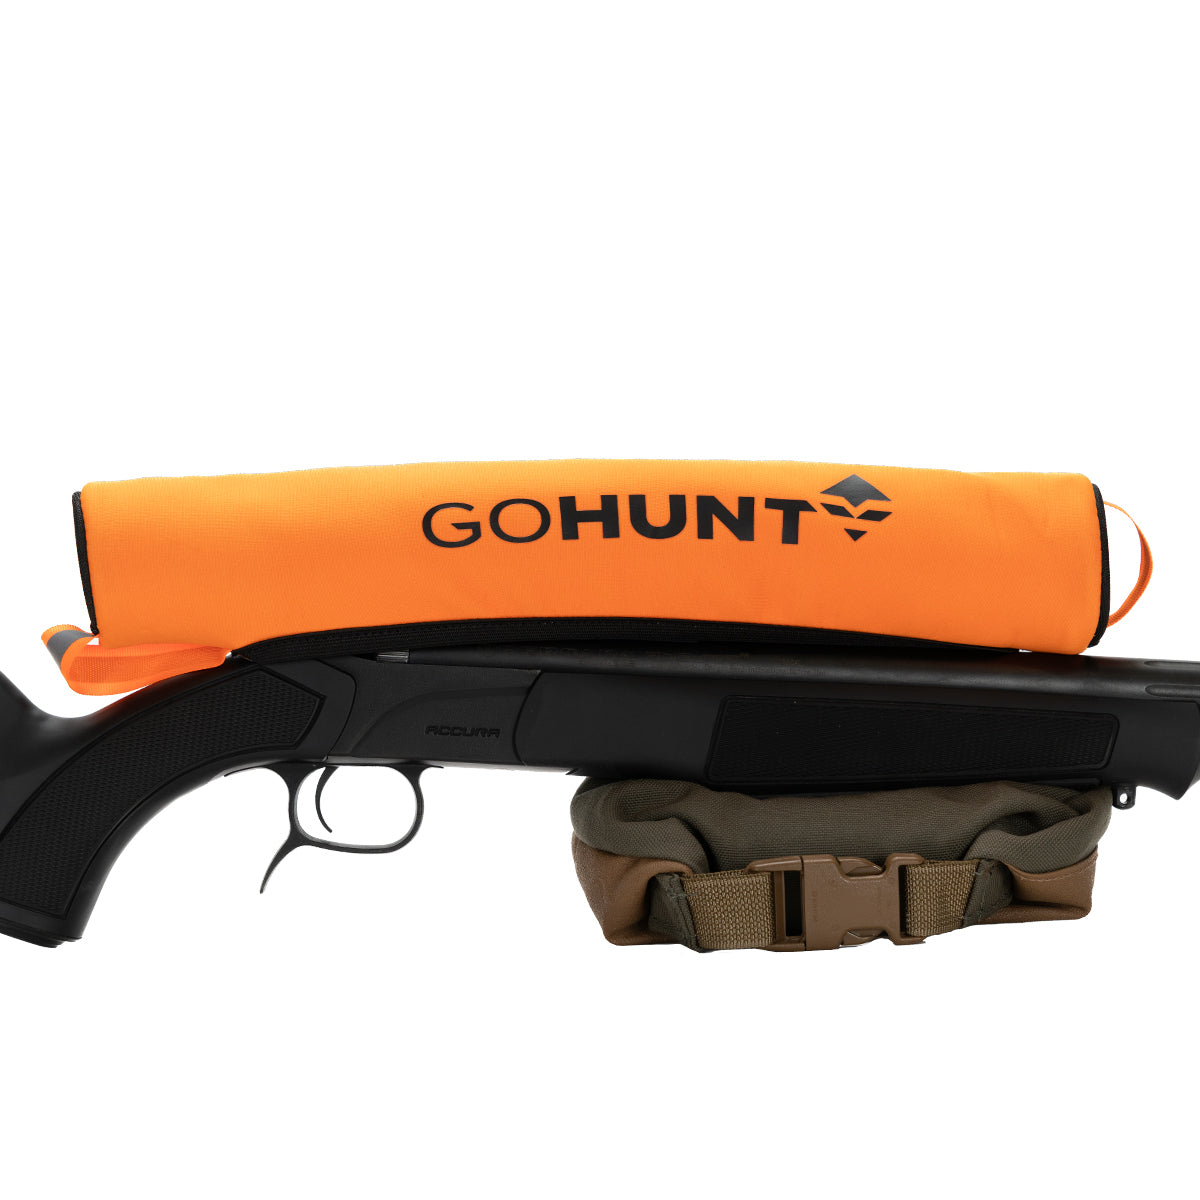 GOHUNT Riflescope Cover in Medium / Blaze Orange by GOHUNT | GOHUNT - GOHUNT Shop